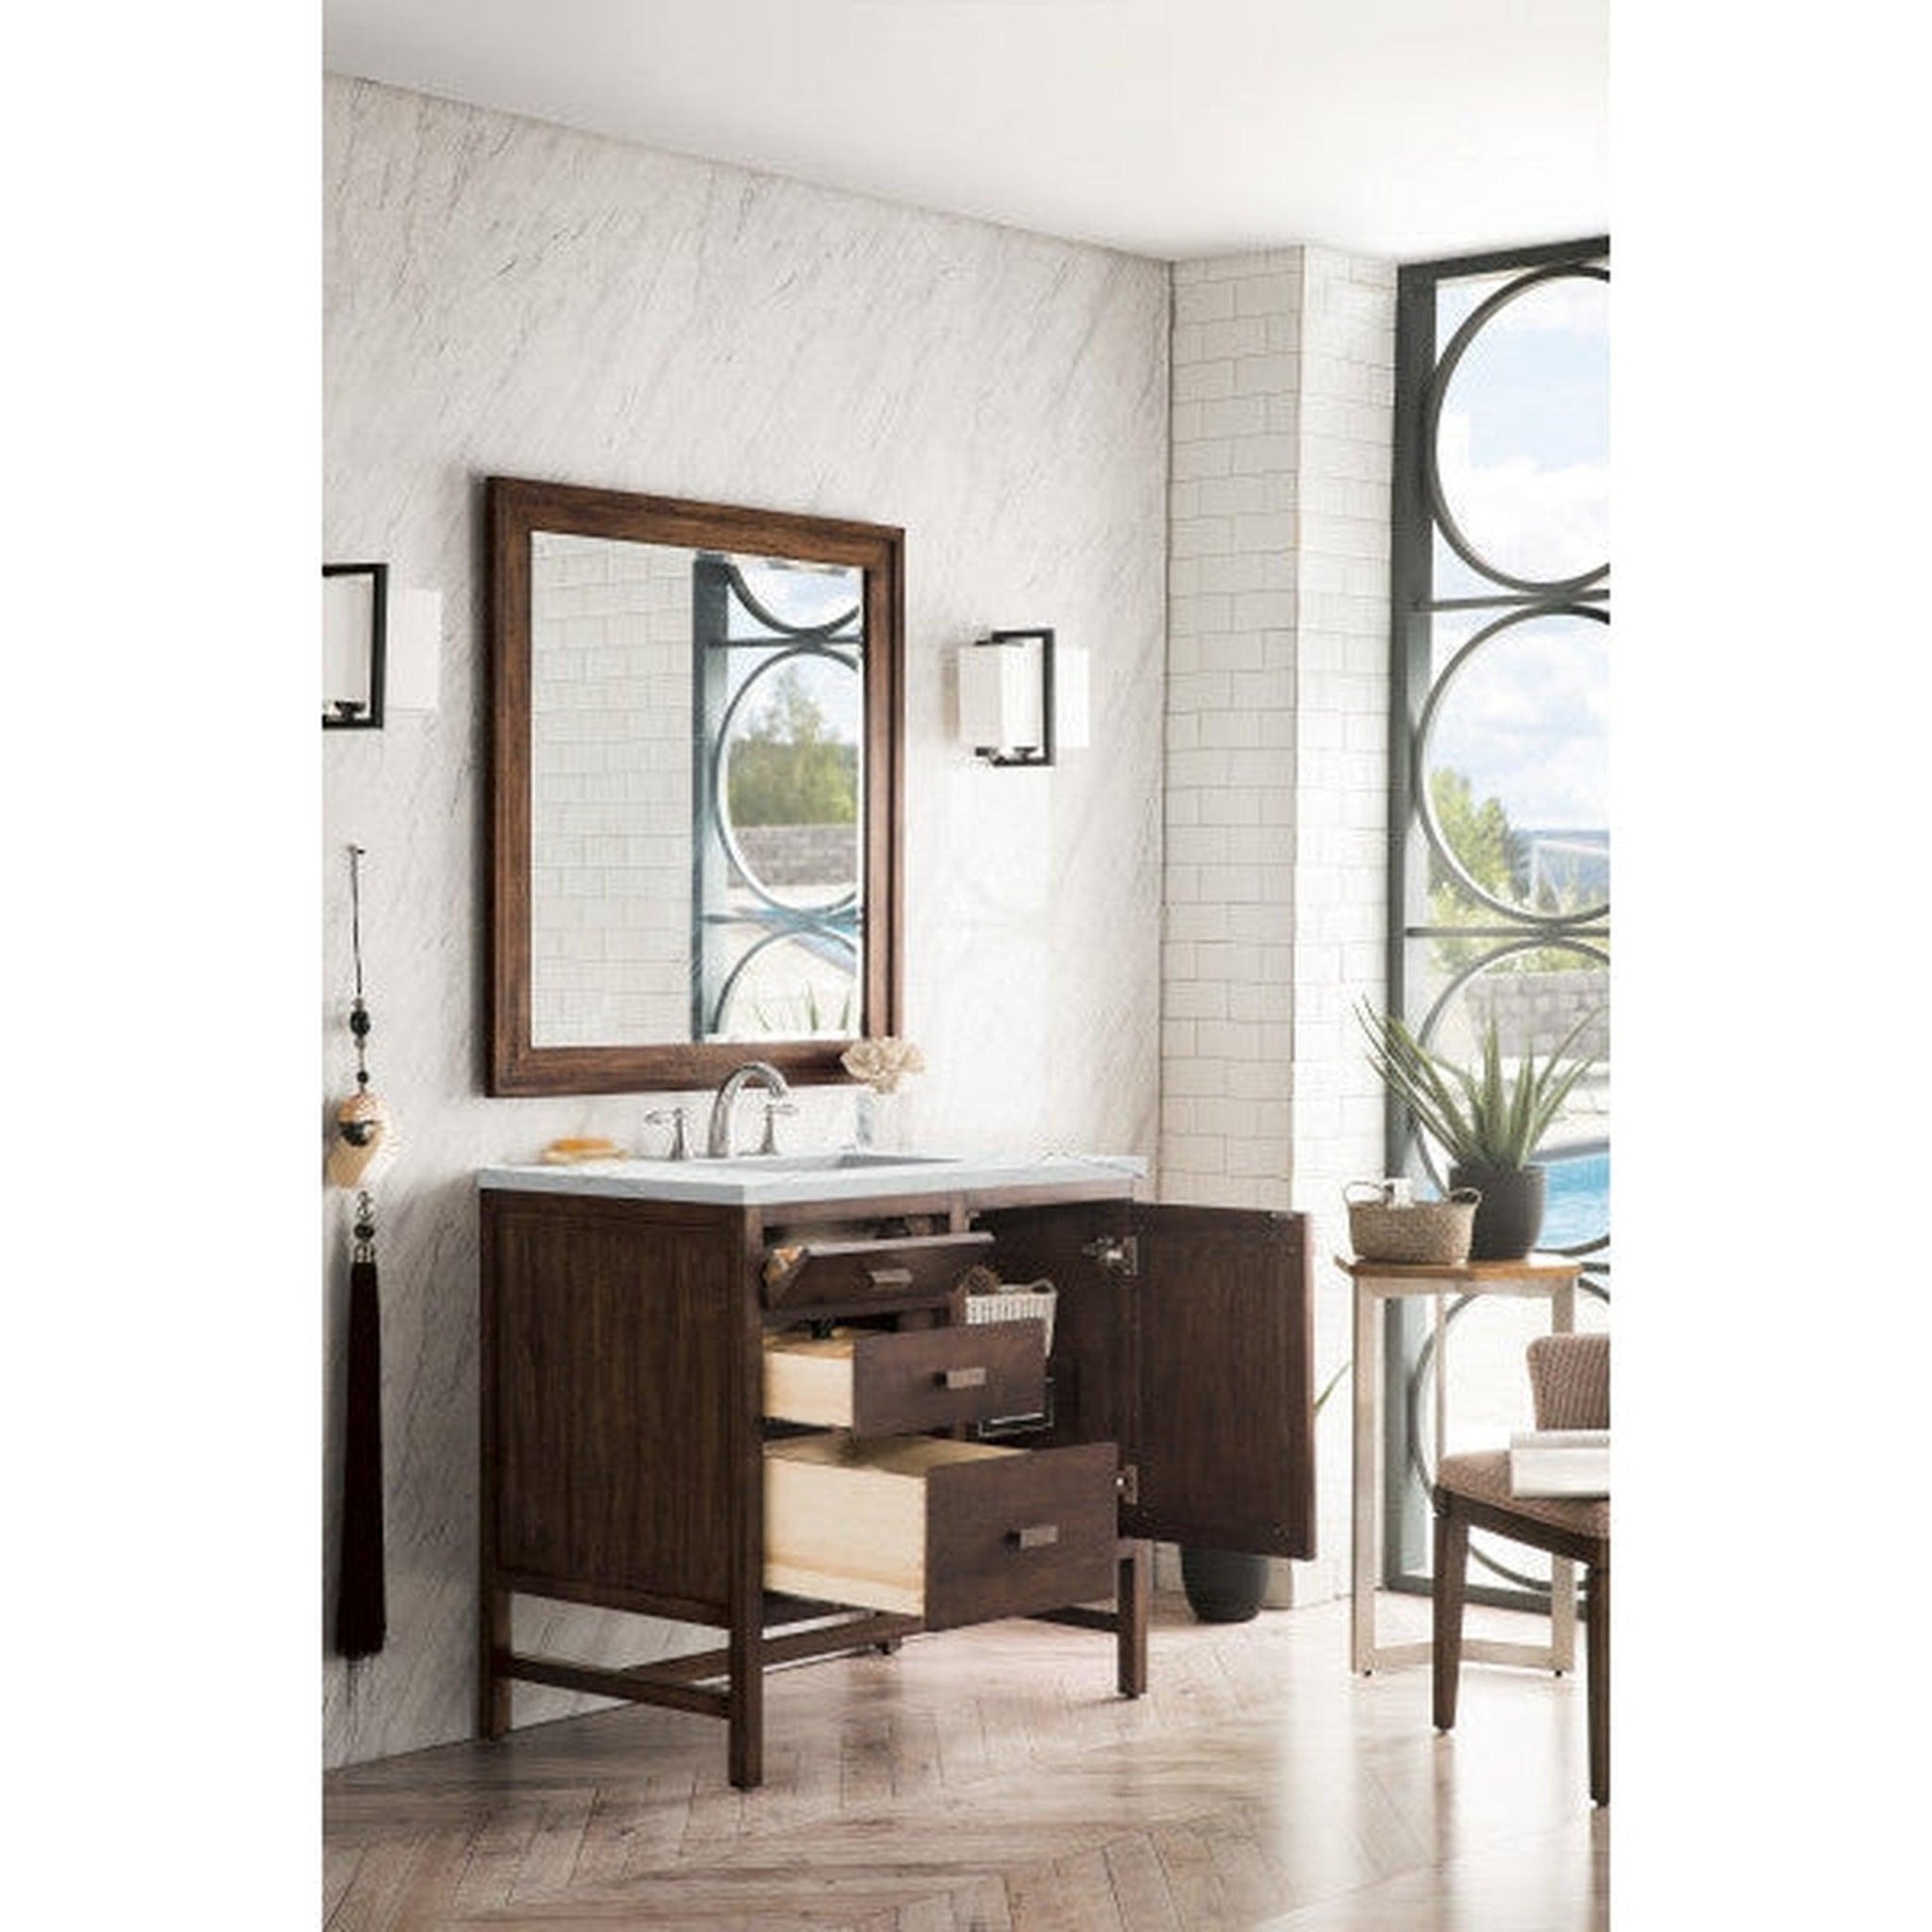 James Martin Addison 36" Single Mid Century Acacia Bathroom Vanity With 1" Ethereal Noctis Quartz Top and Rectangular Ceramic Sink